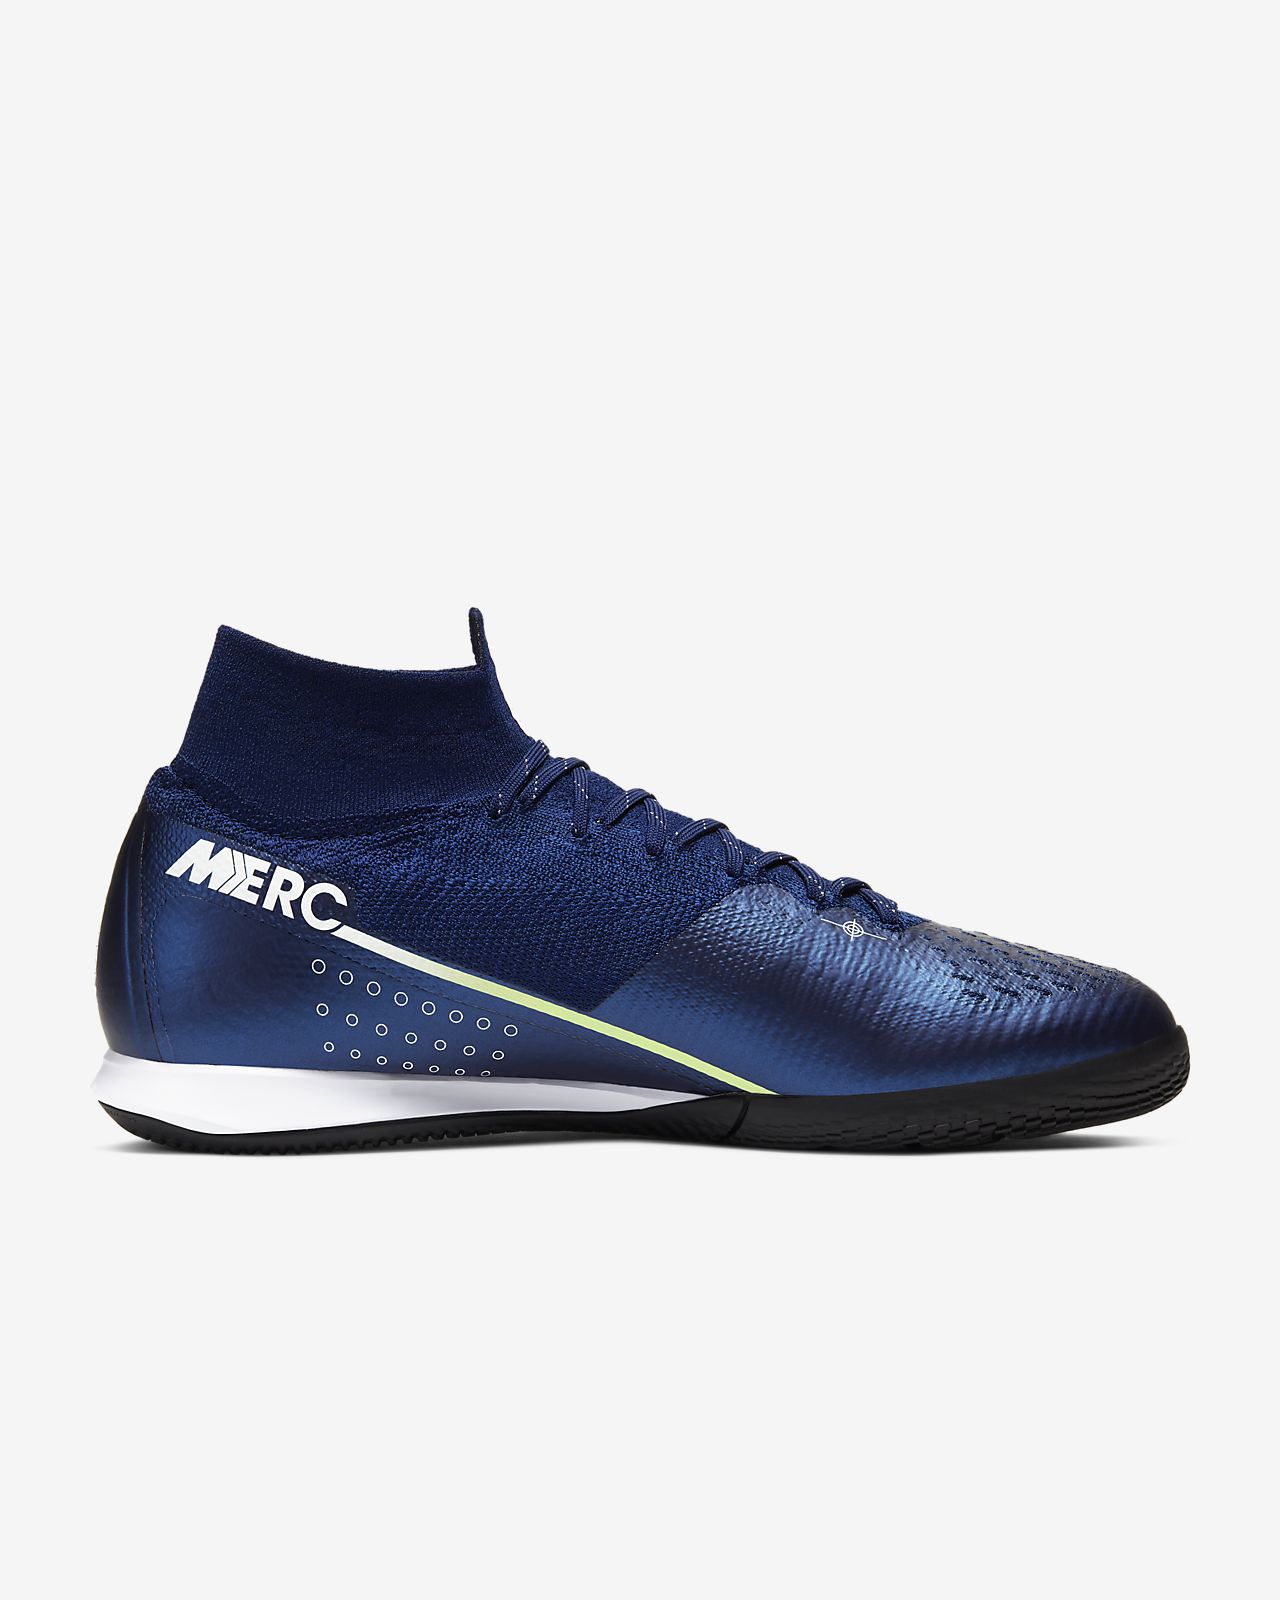 Nike Mercurial SuperflyX 6 Elite IC Soccer Shoes Volt Black